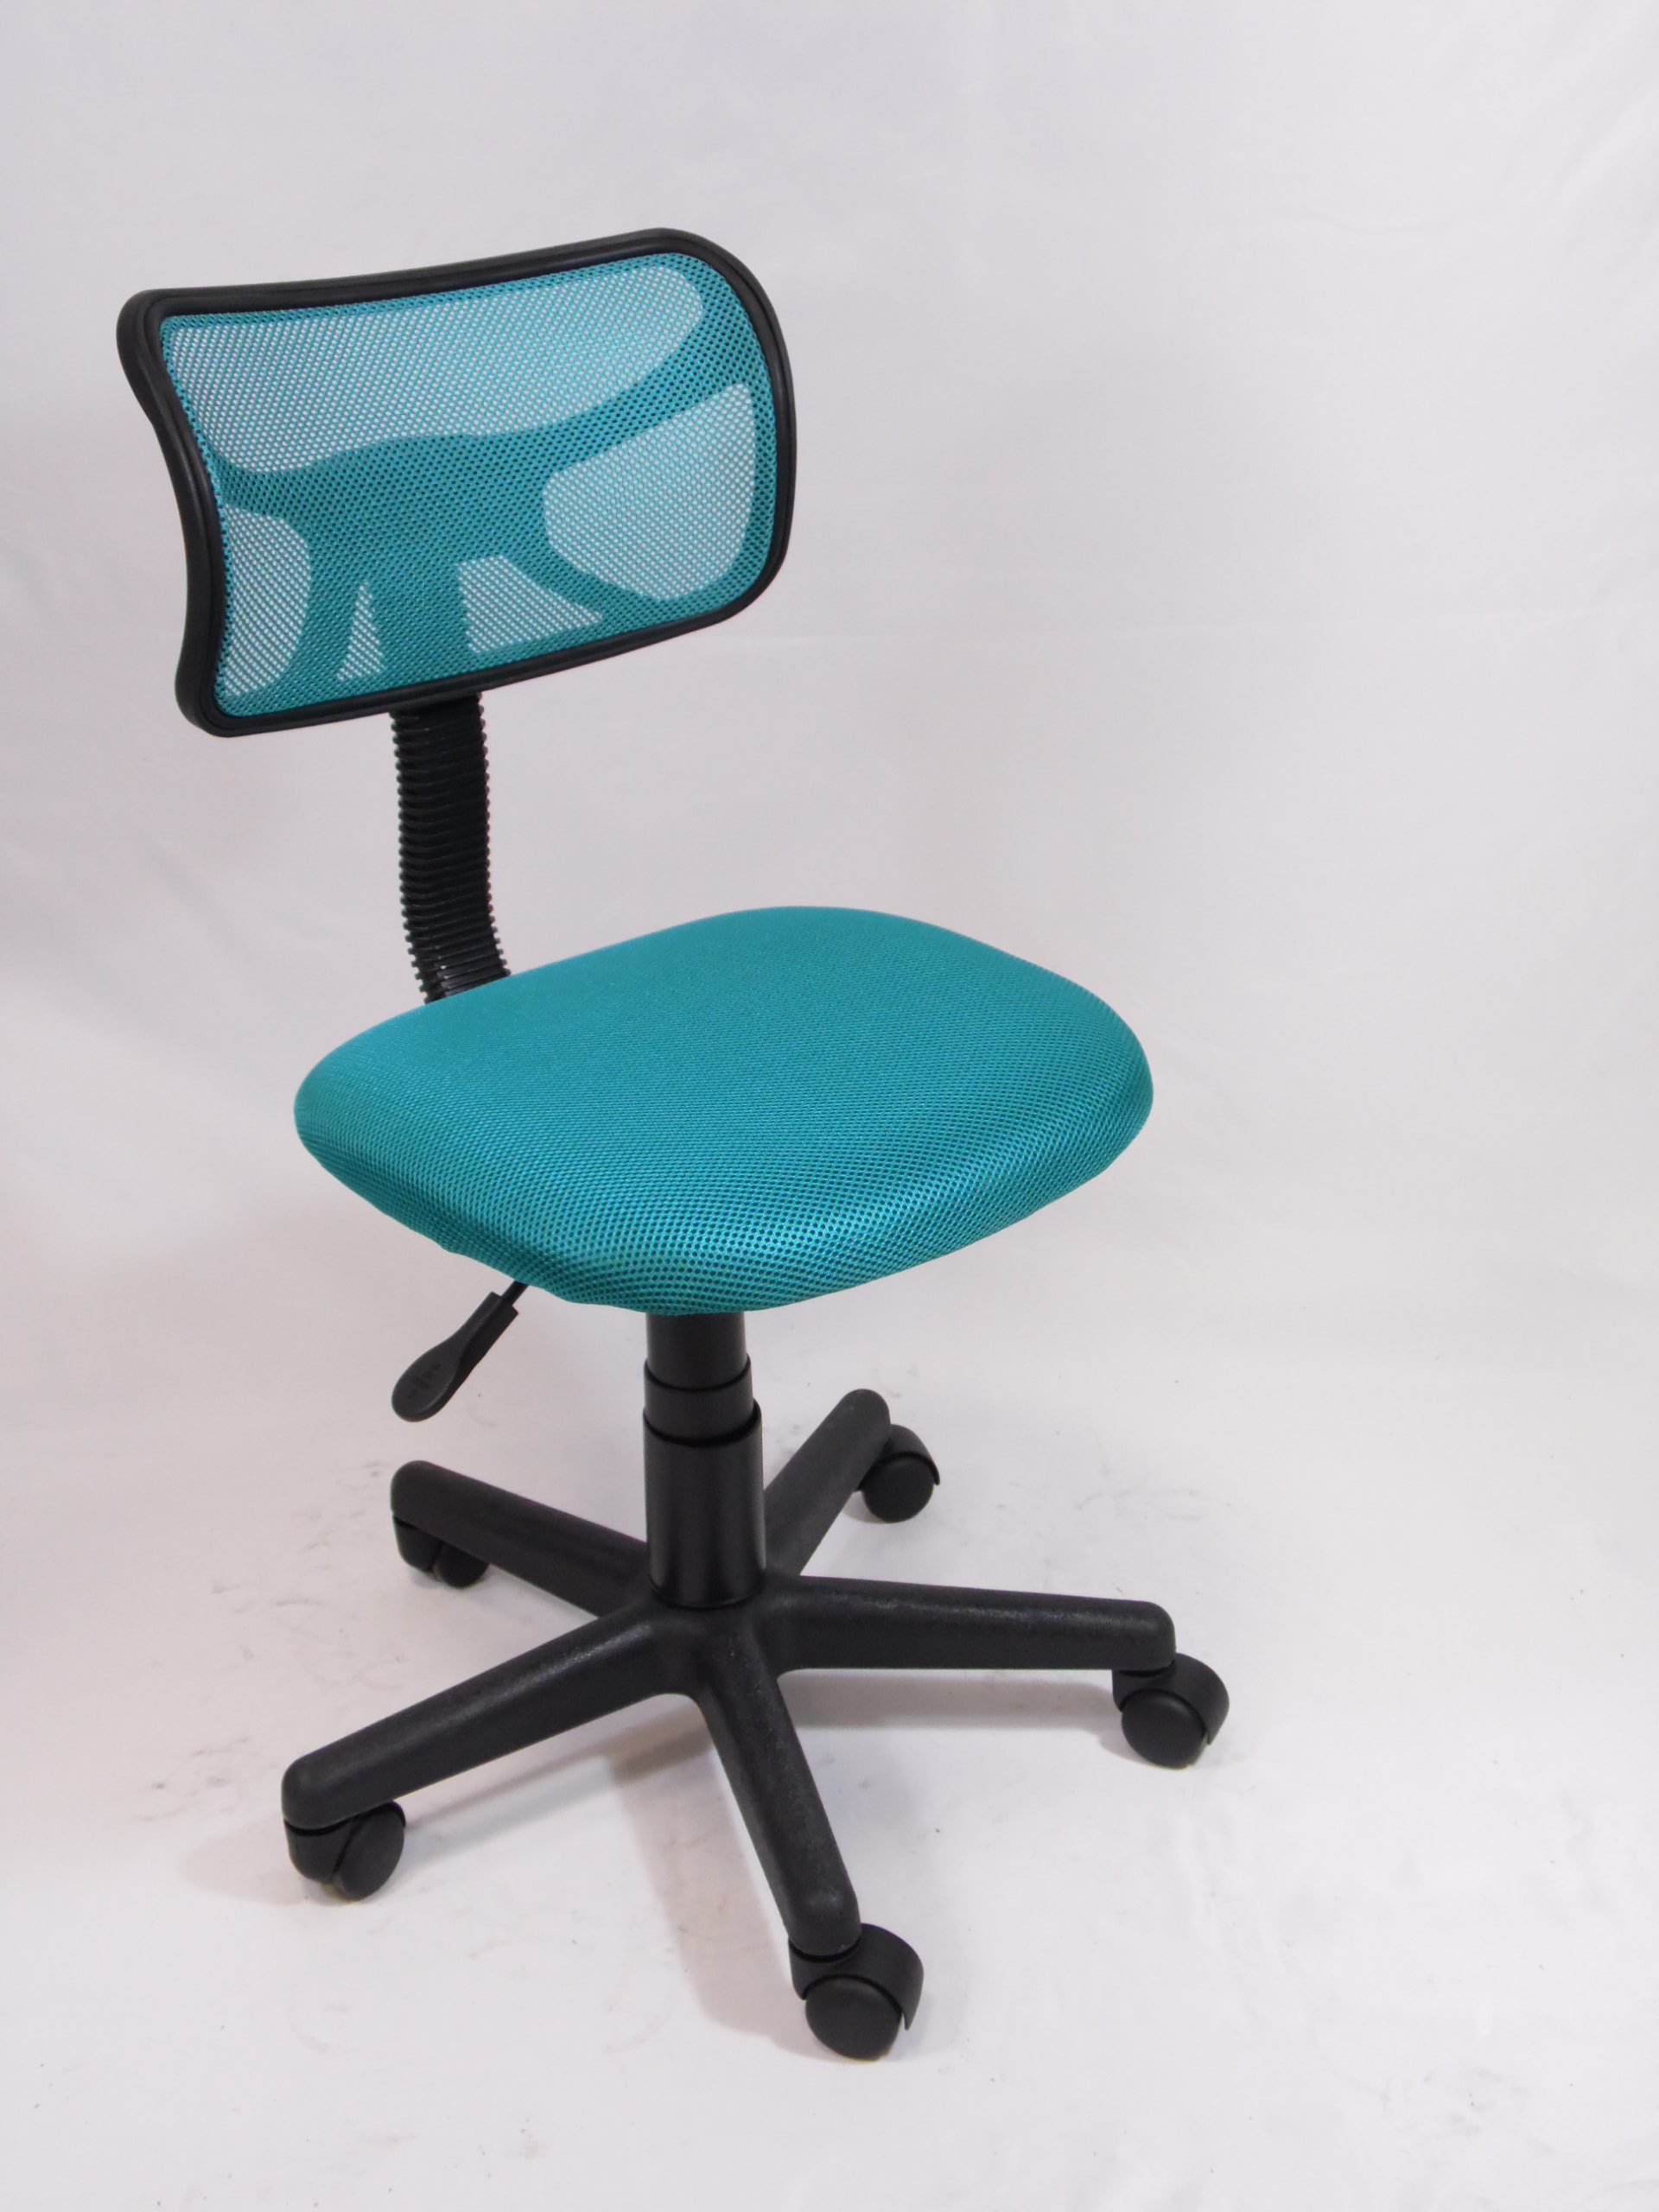 sedie per pc dimensioni: h max 83cm x d 55cm, h sedile 45cm x d sedile 44cm; Materiale: plastica e tessuto color blu